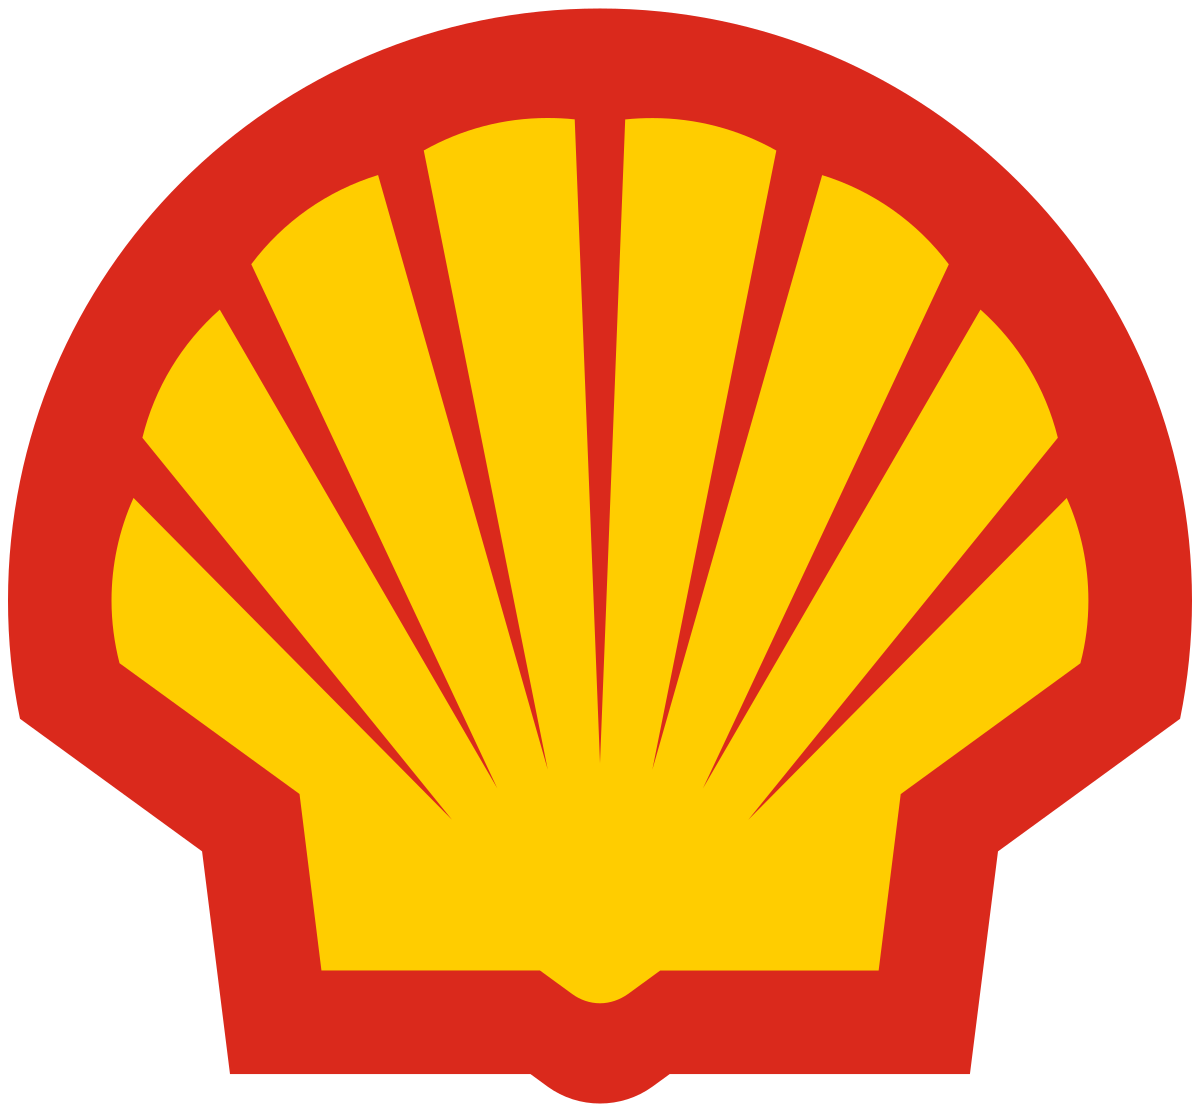 Shell_logo.svg.png